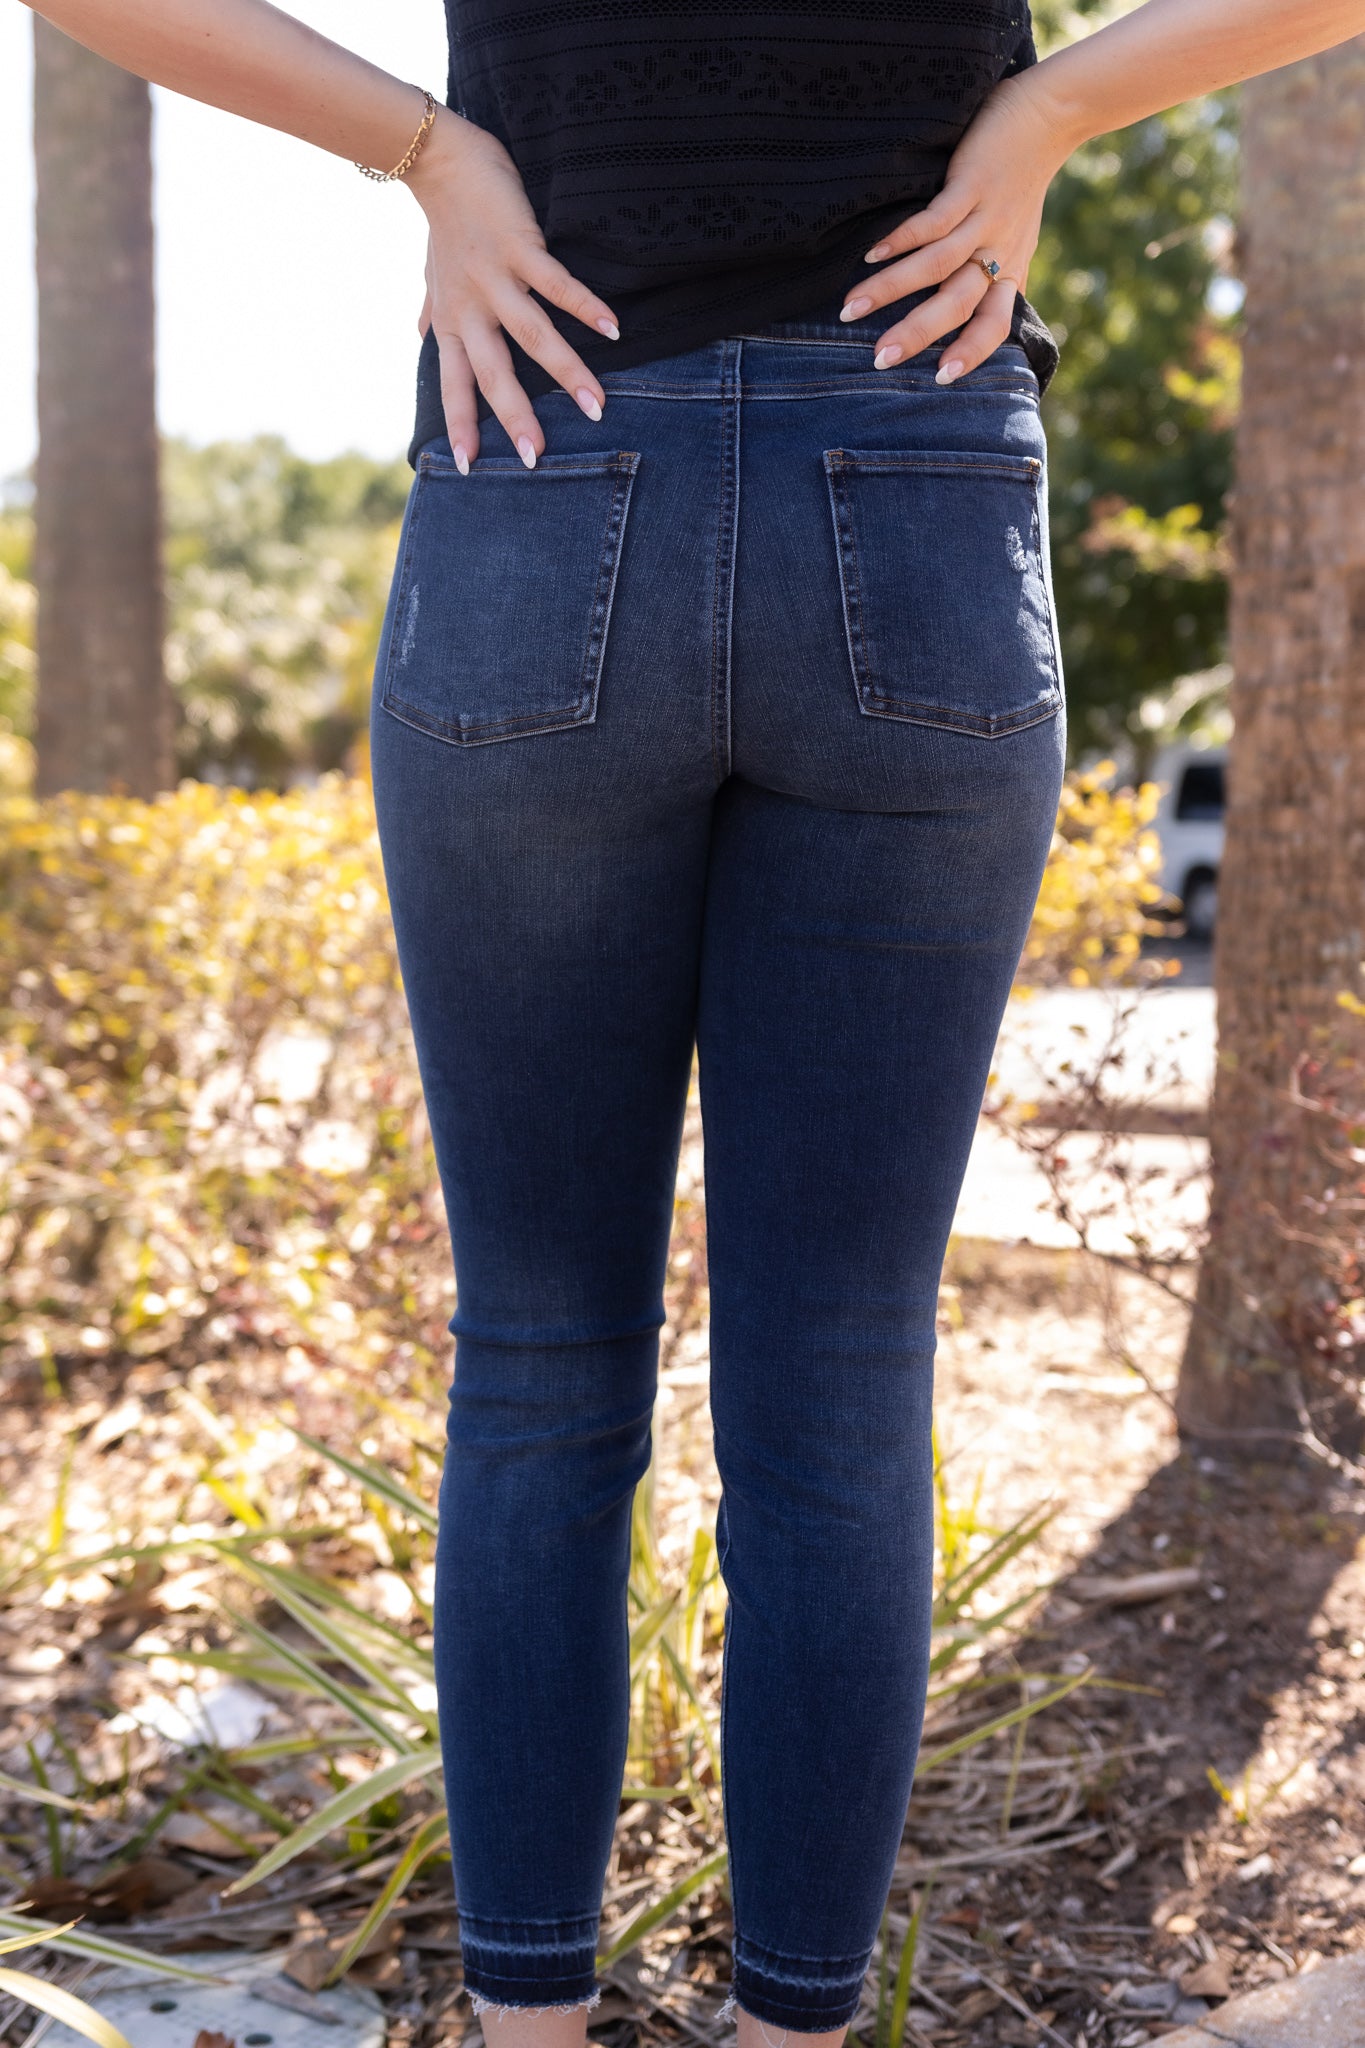 NEW Spanx Distressed Ankle Skinny Jeans Medium Wash Women's Size Medium